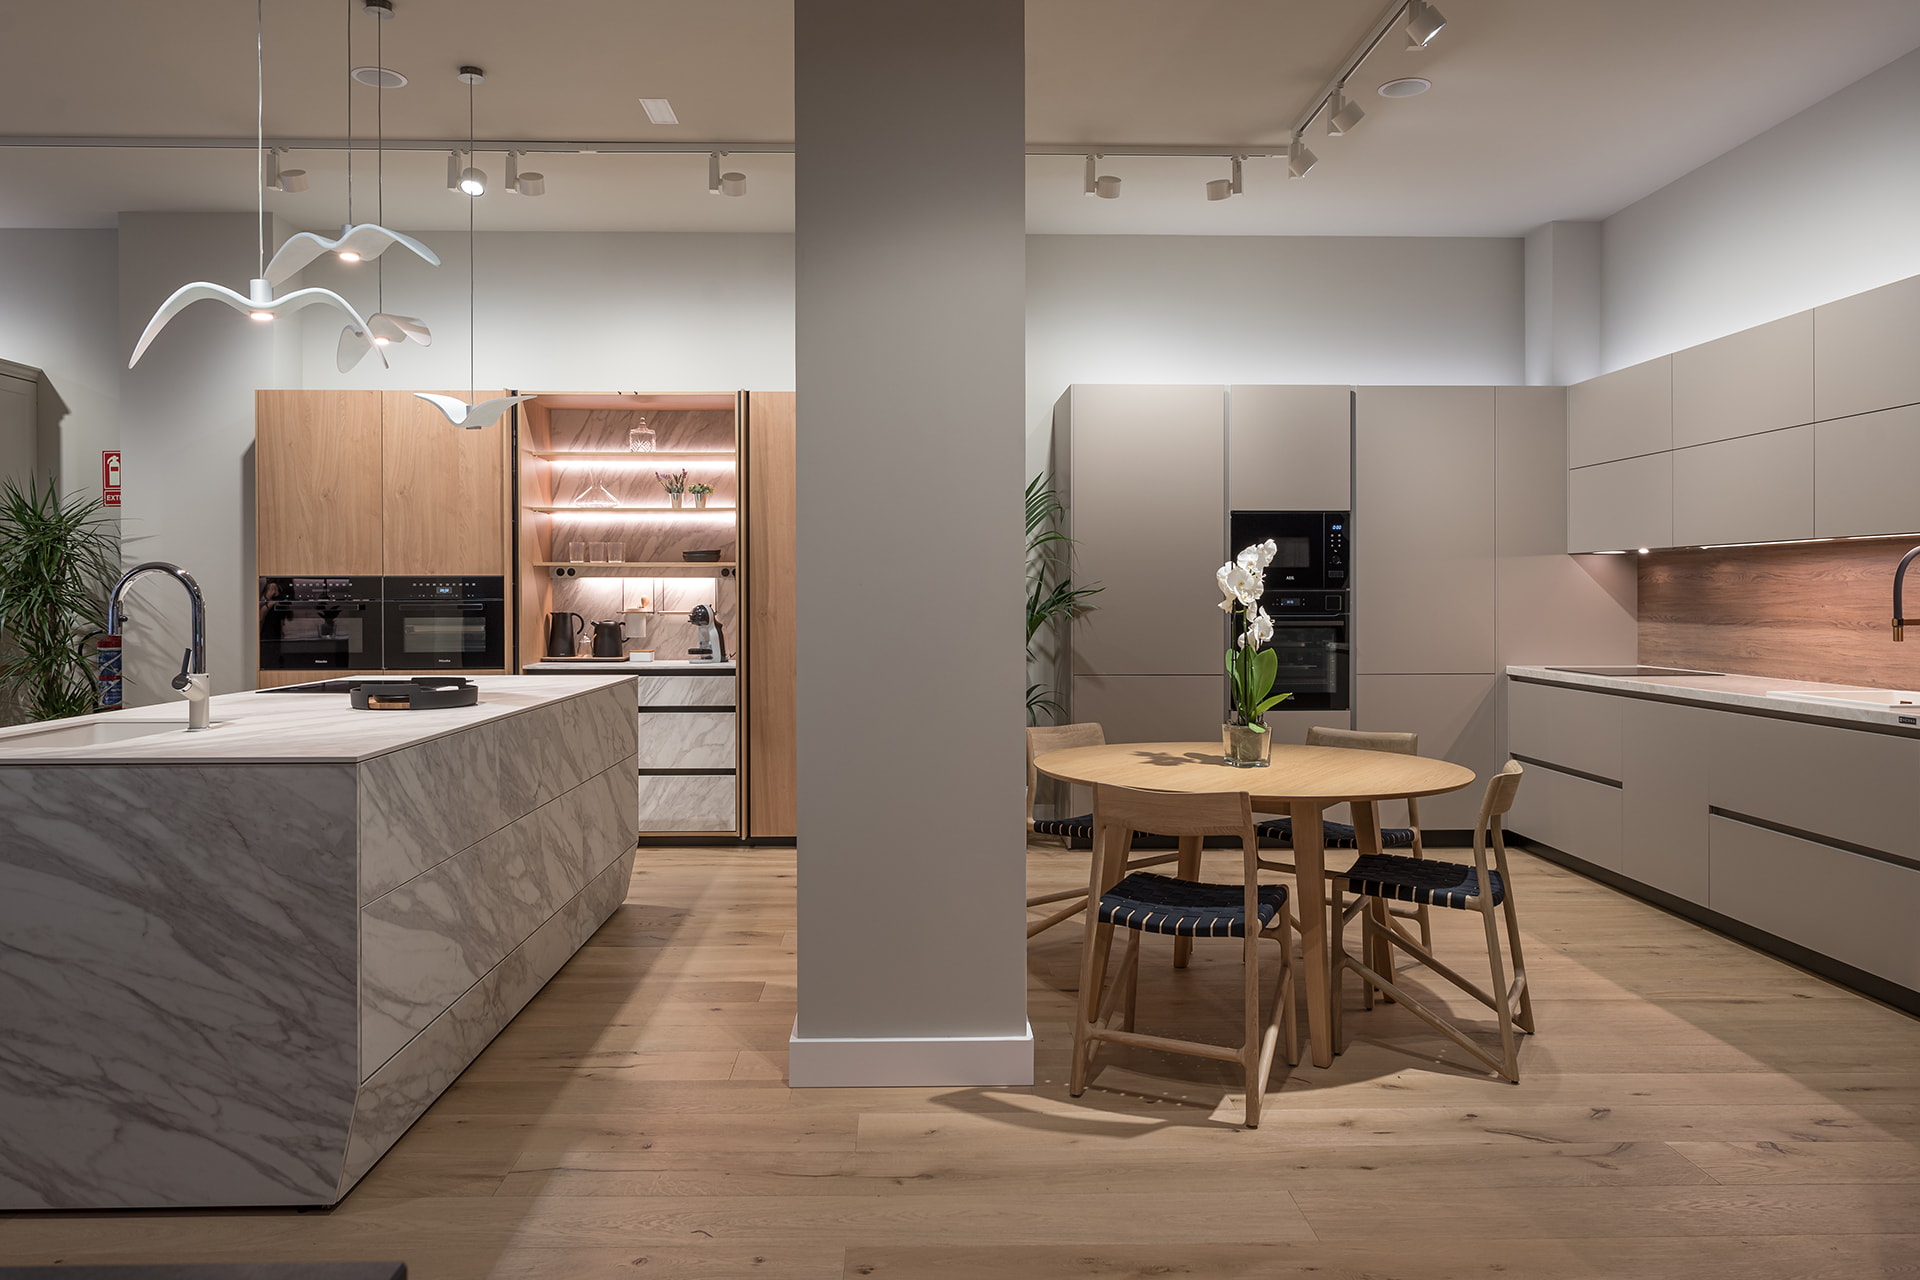 Grey and wood kitchen at new kitchen showroom in Granada